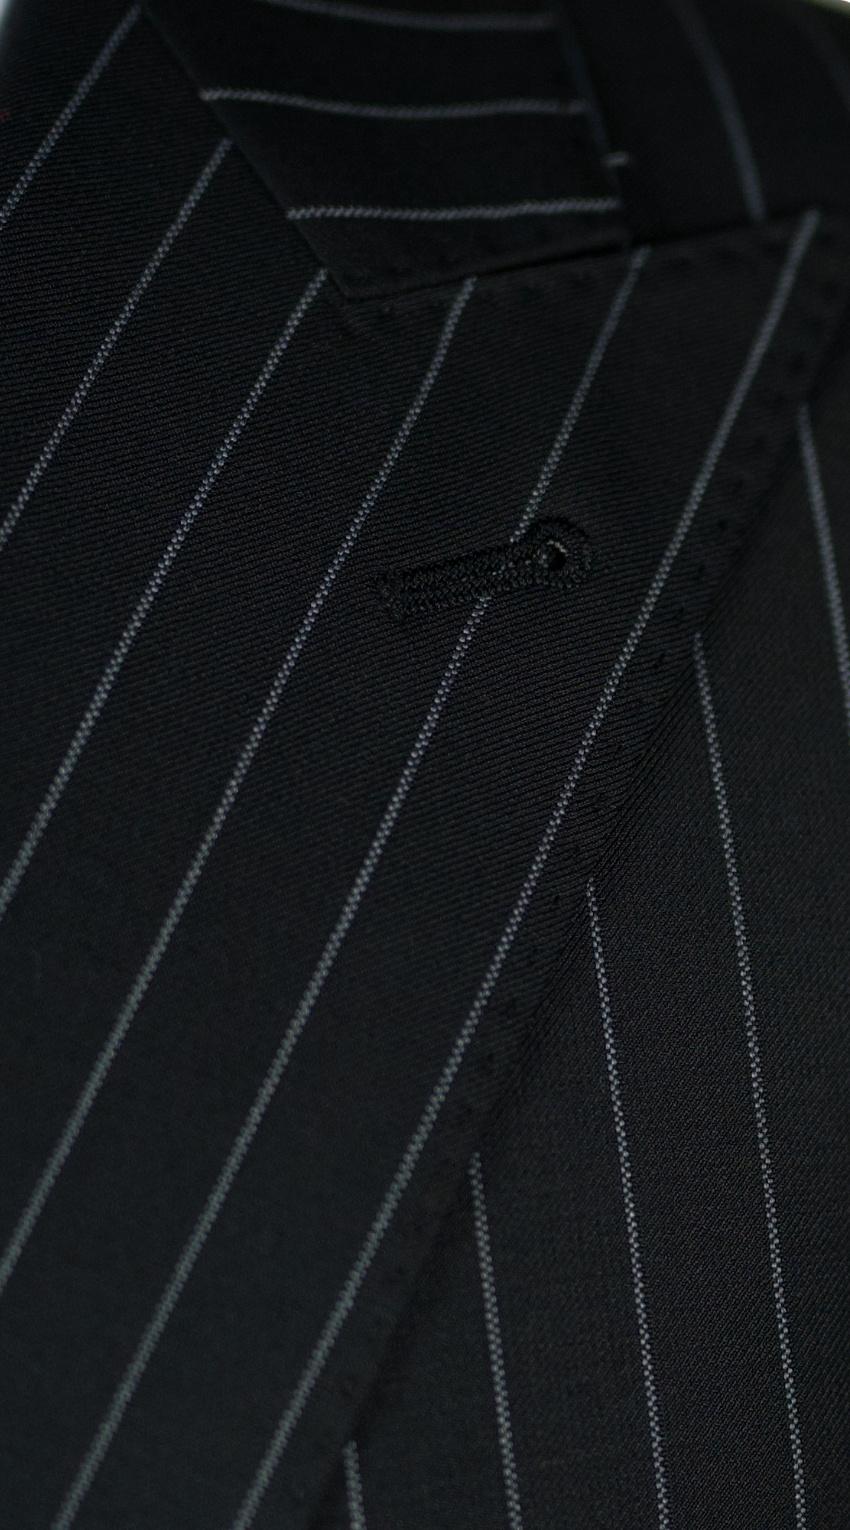 Black Pinstripe Suit